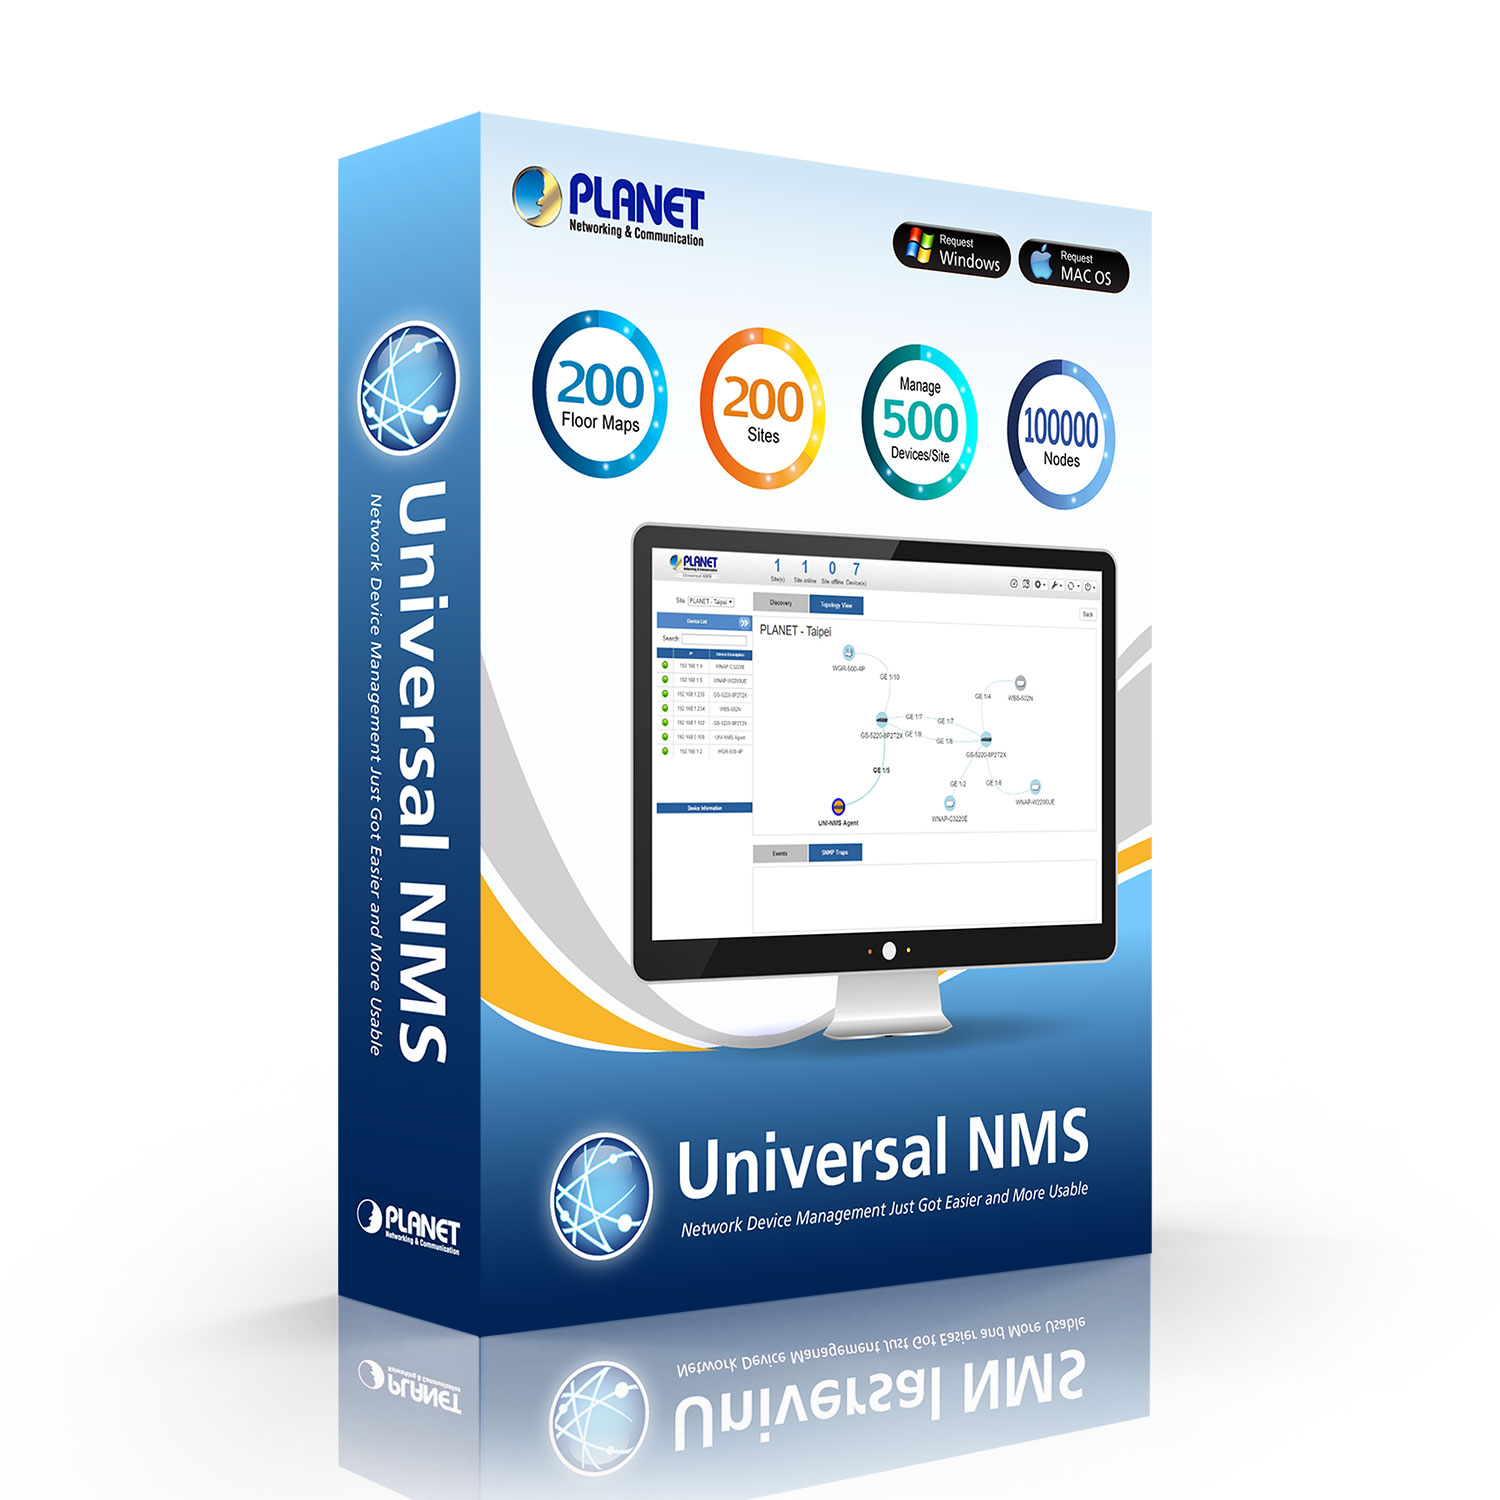 Universal Network Management System